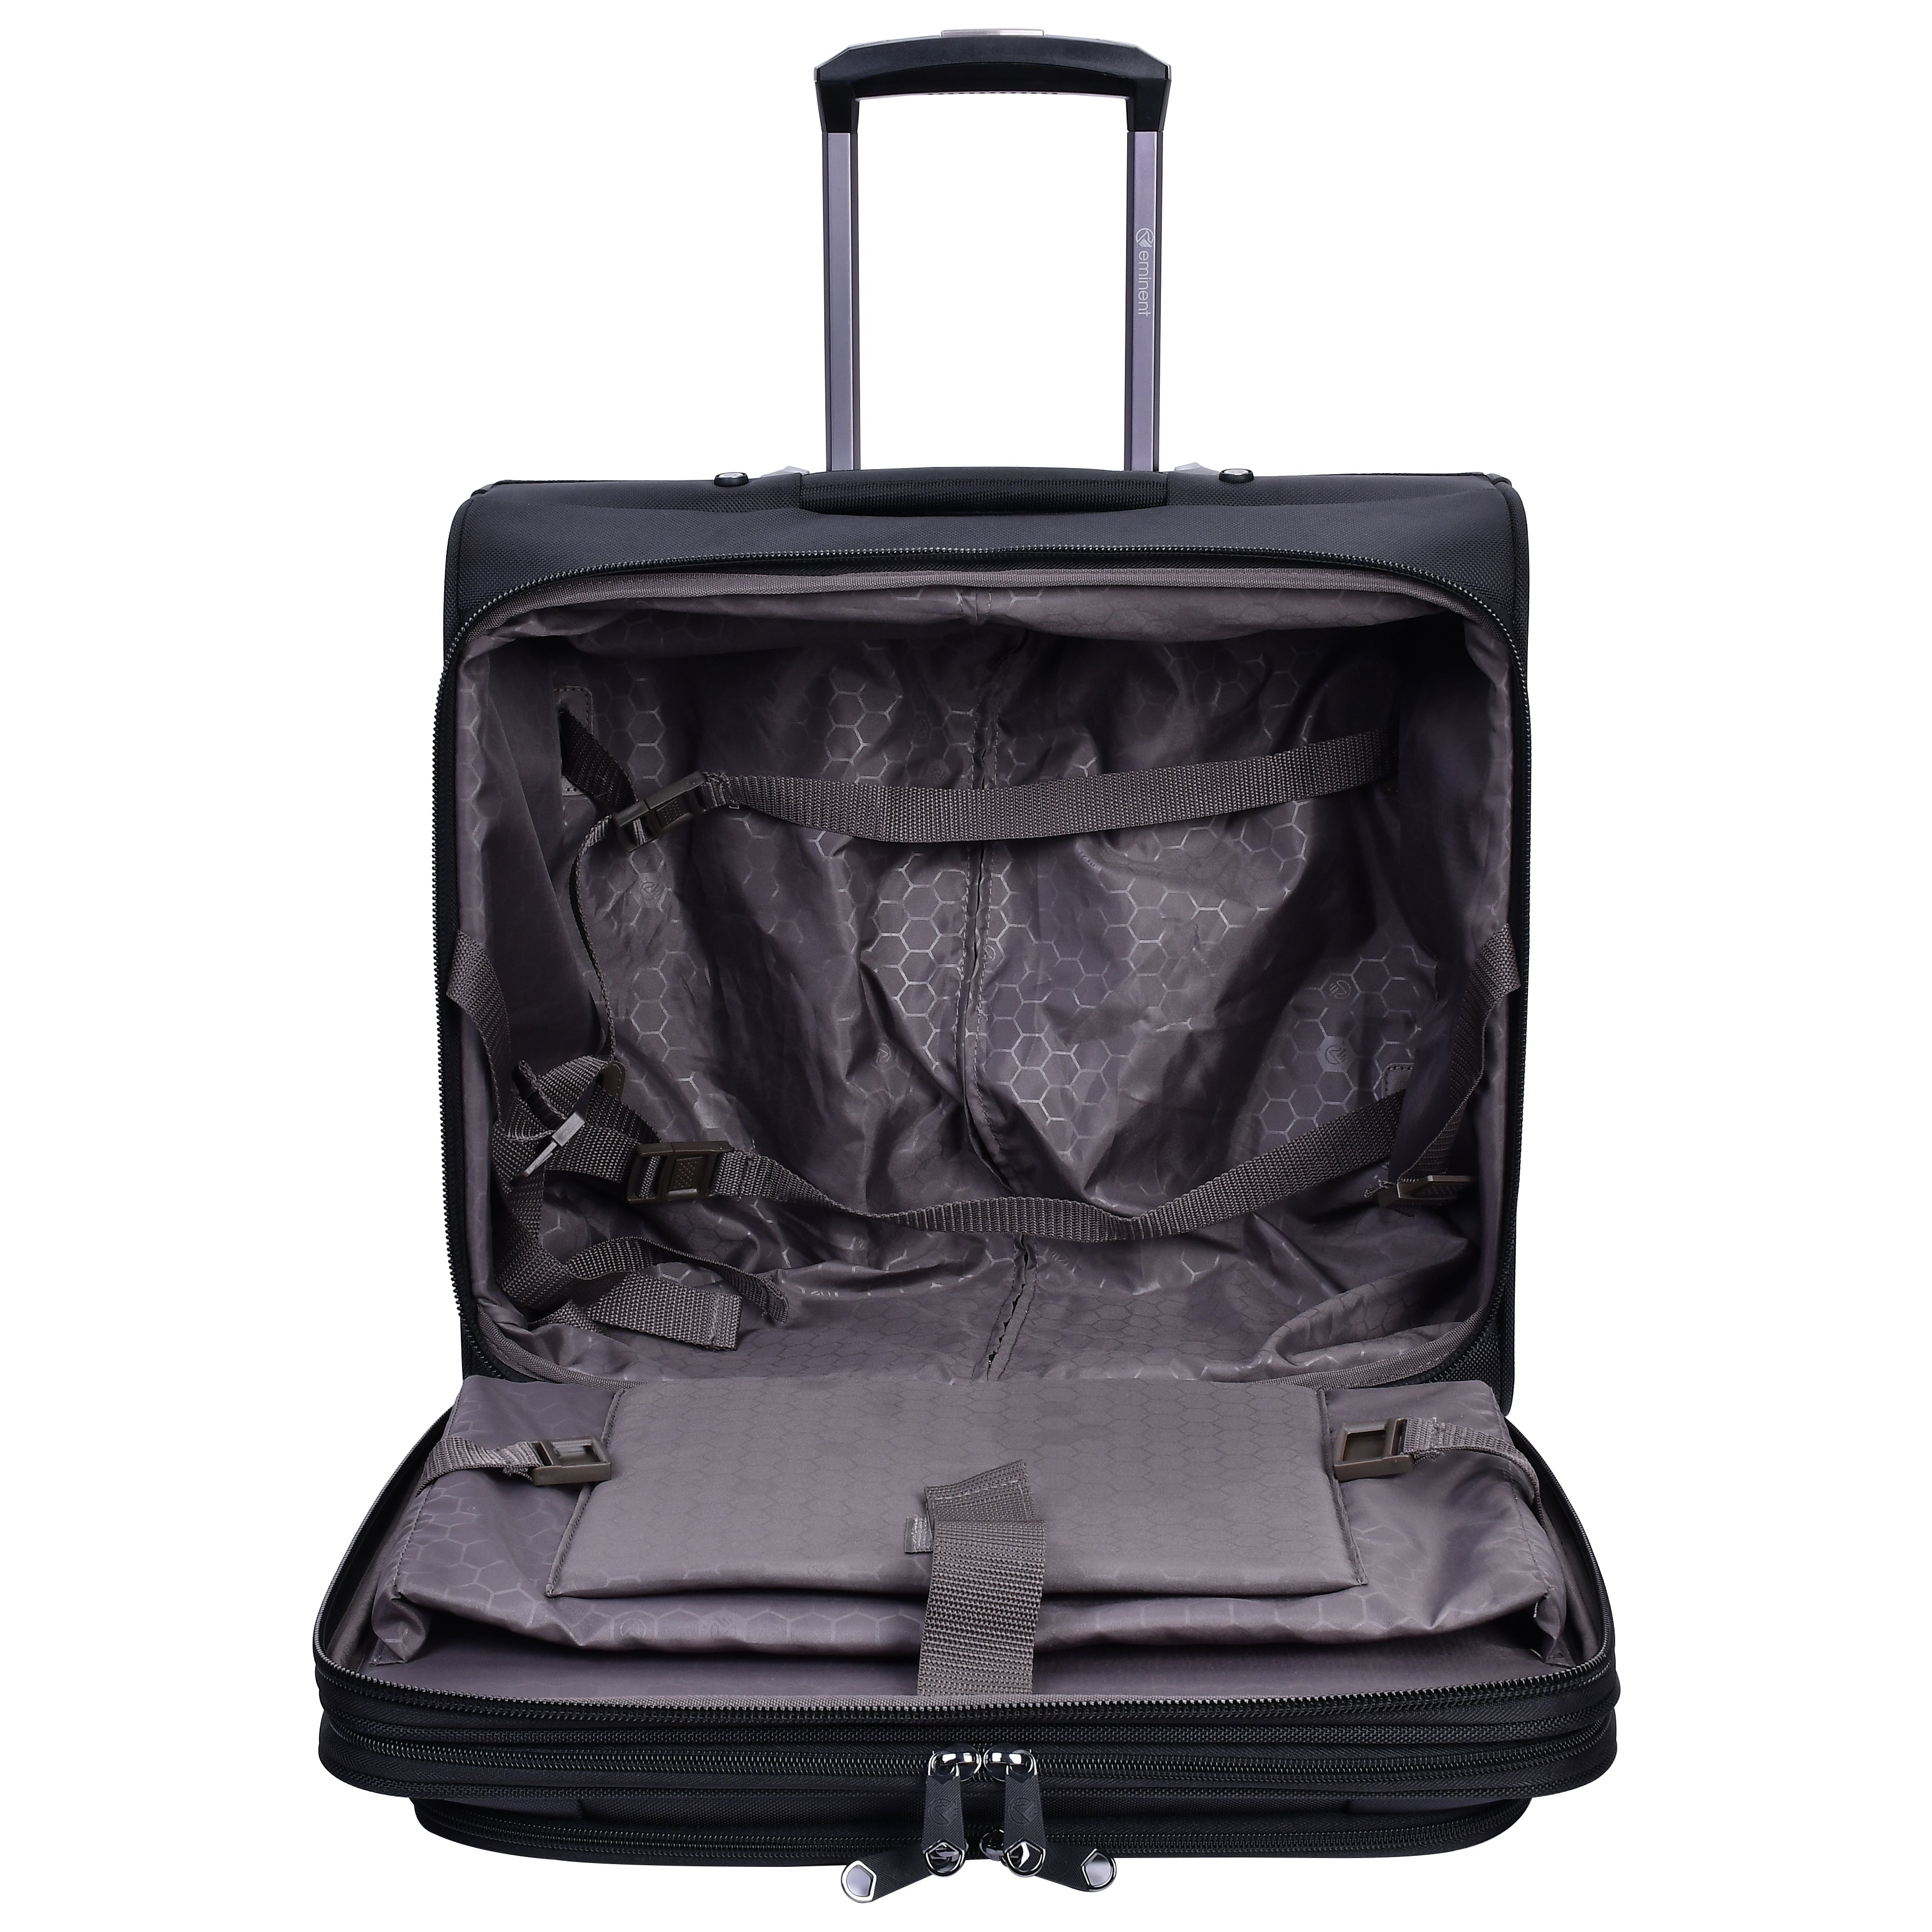 Eminent Business Pilot Case Trolley Multiple Compartment Laptop Bag for Men and Women, V421-2-17